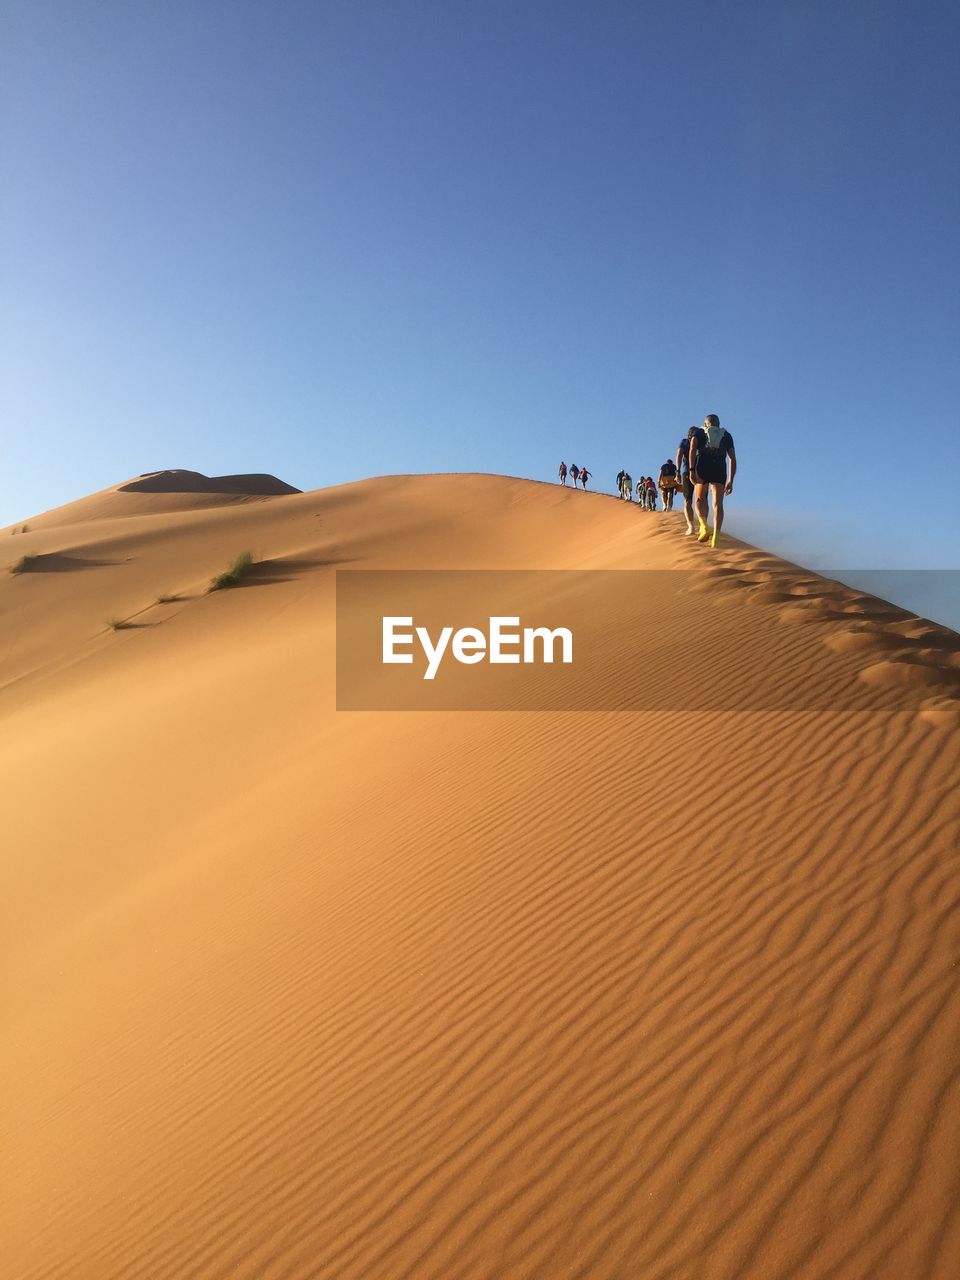 People walking on sand dune in desert against clear sky